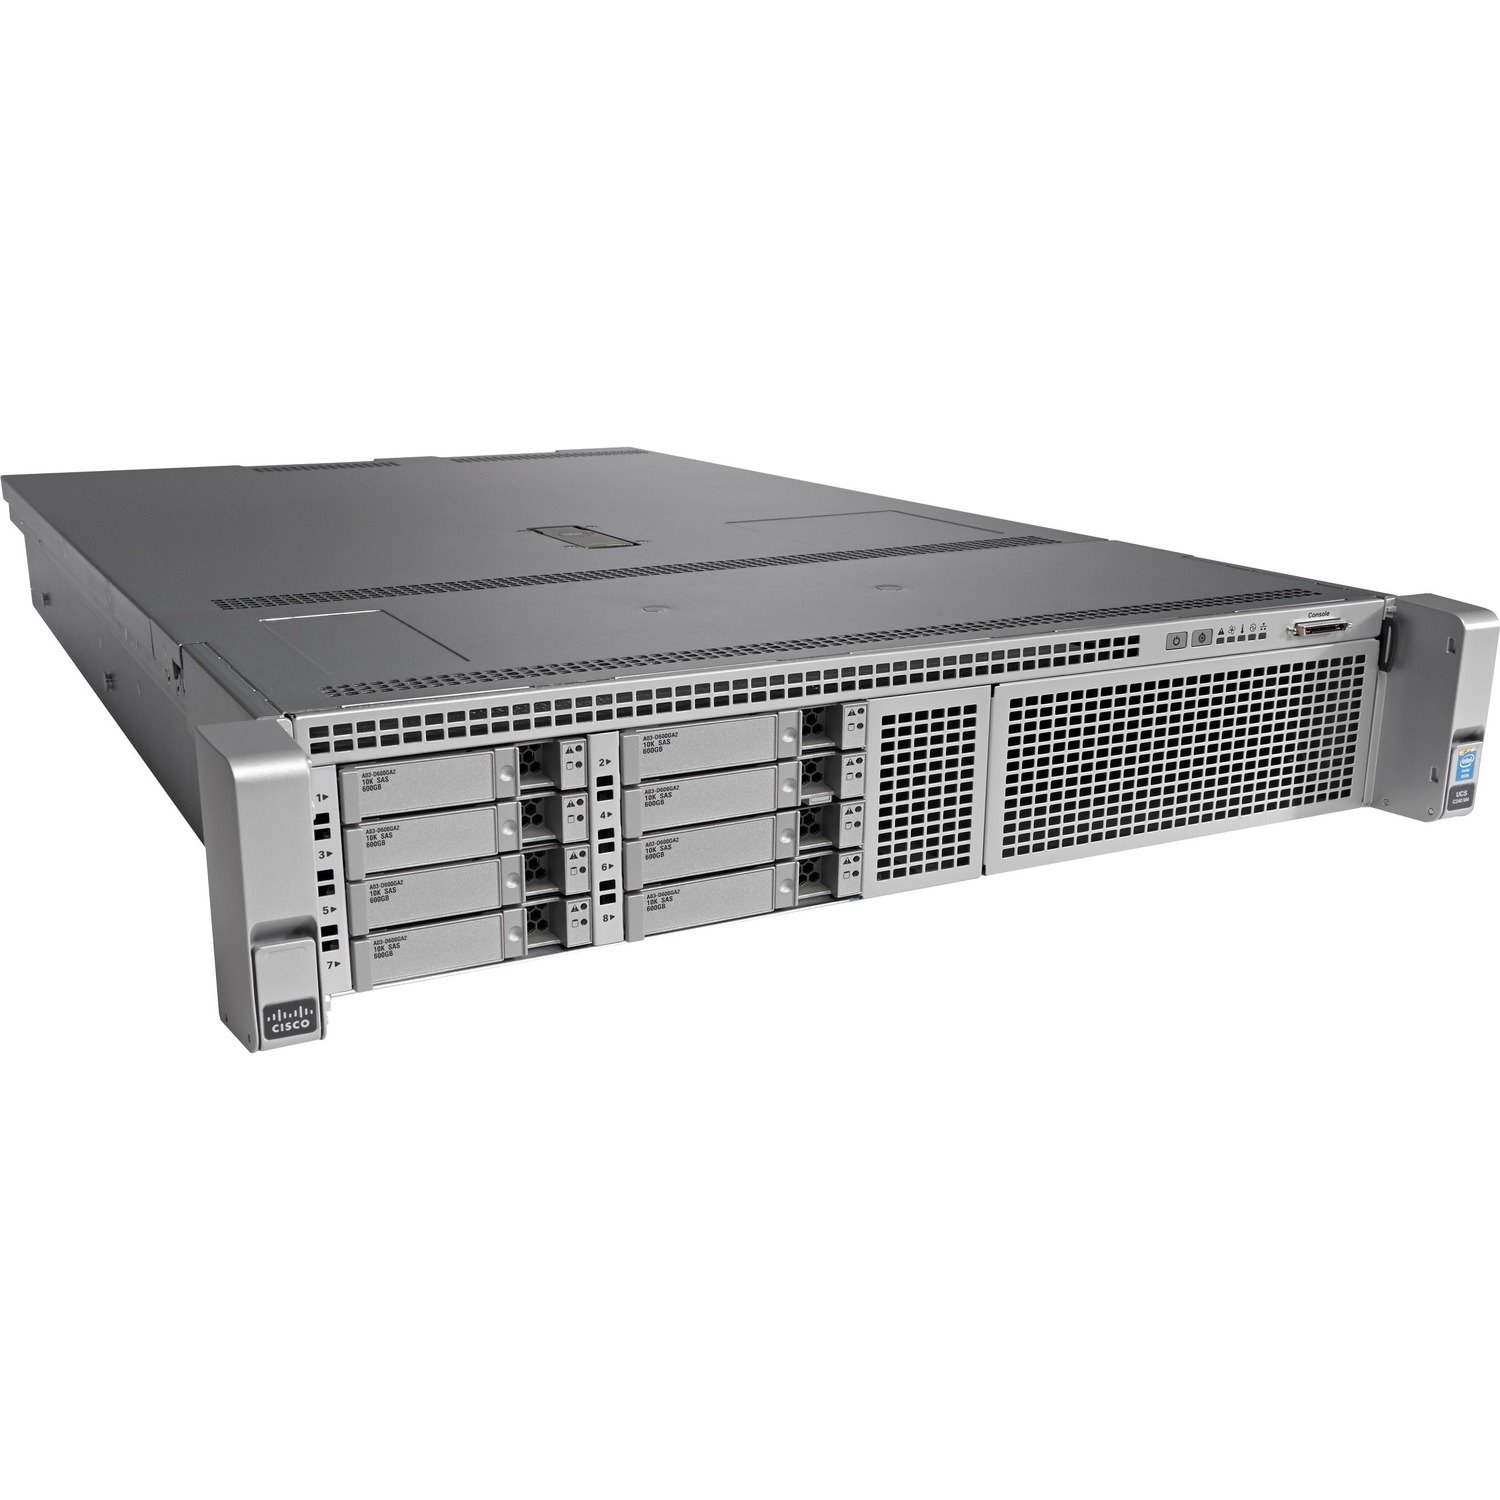 Cisco C240 M4 2U Rack Server - 2 x Intel Xeon E5-2680 v4 2.40 GHz - 64 GB RAM - 12Gb/s SAS Controller - Refurbished